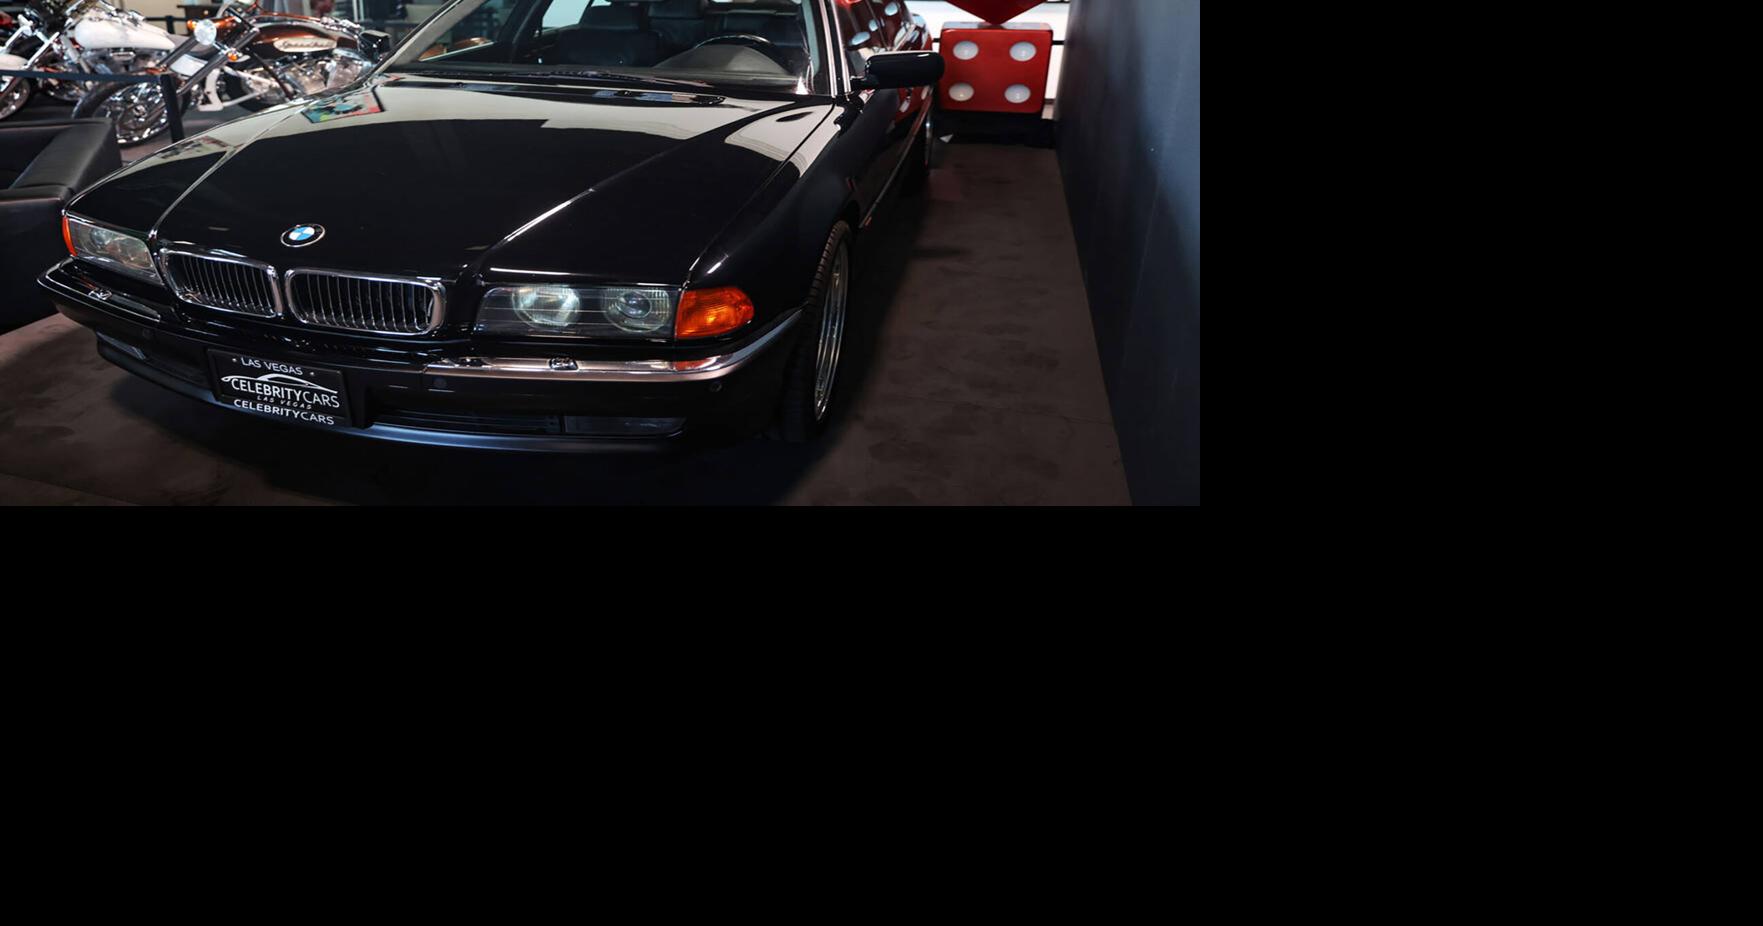 1996 Used BMW 7 Series Tupac Shakur at Celebrity Cars Las Vegas